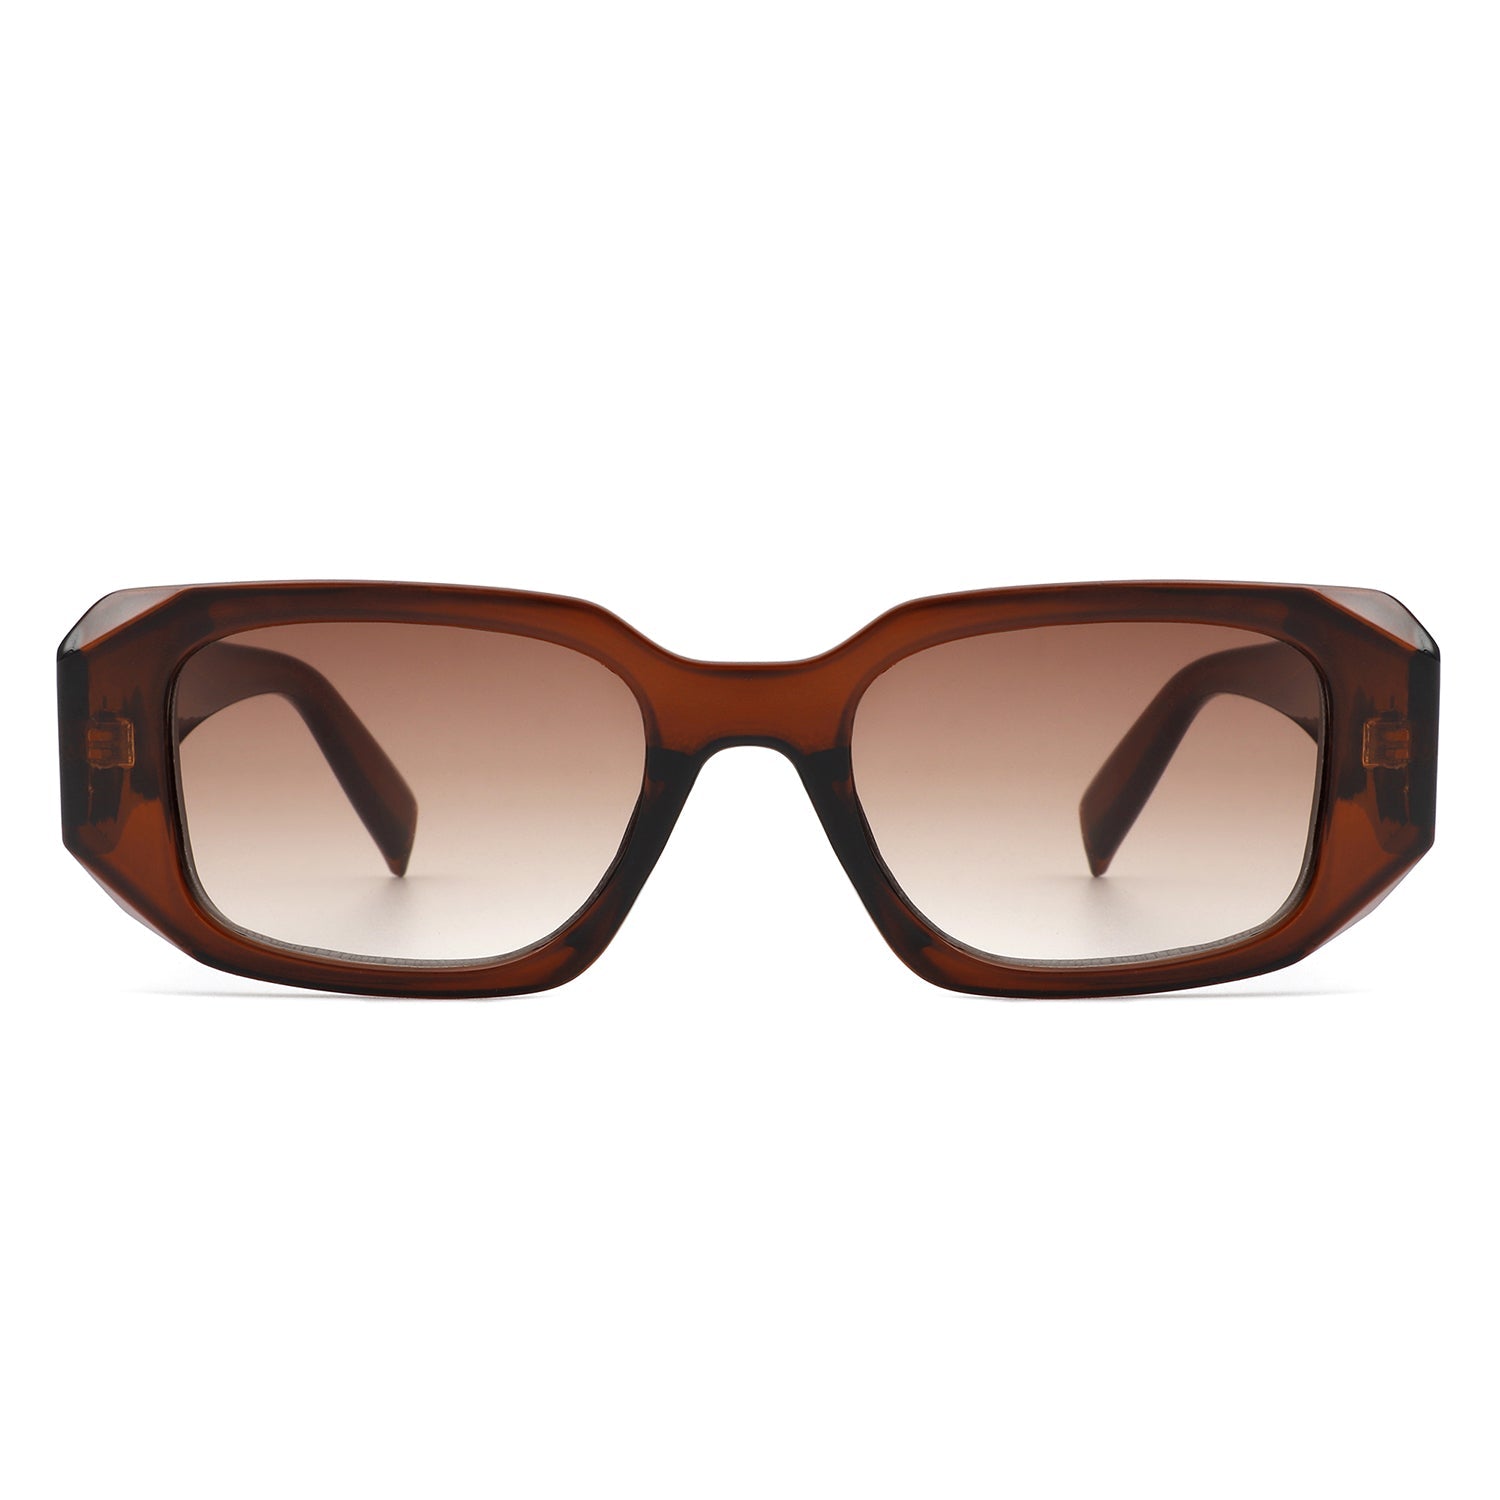 Goldenyx - Rectangular Fashion Geometric Narrow Slim Retro Sunglasses